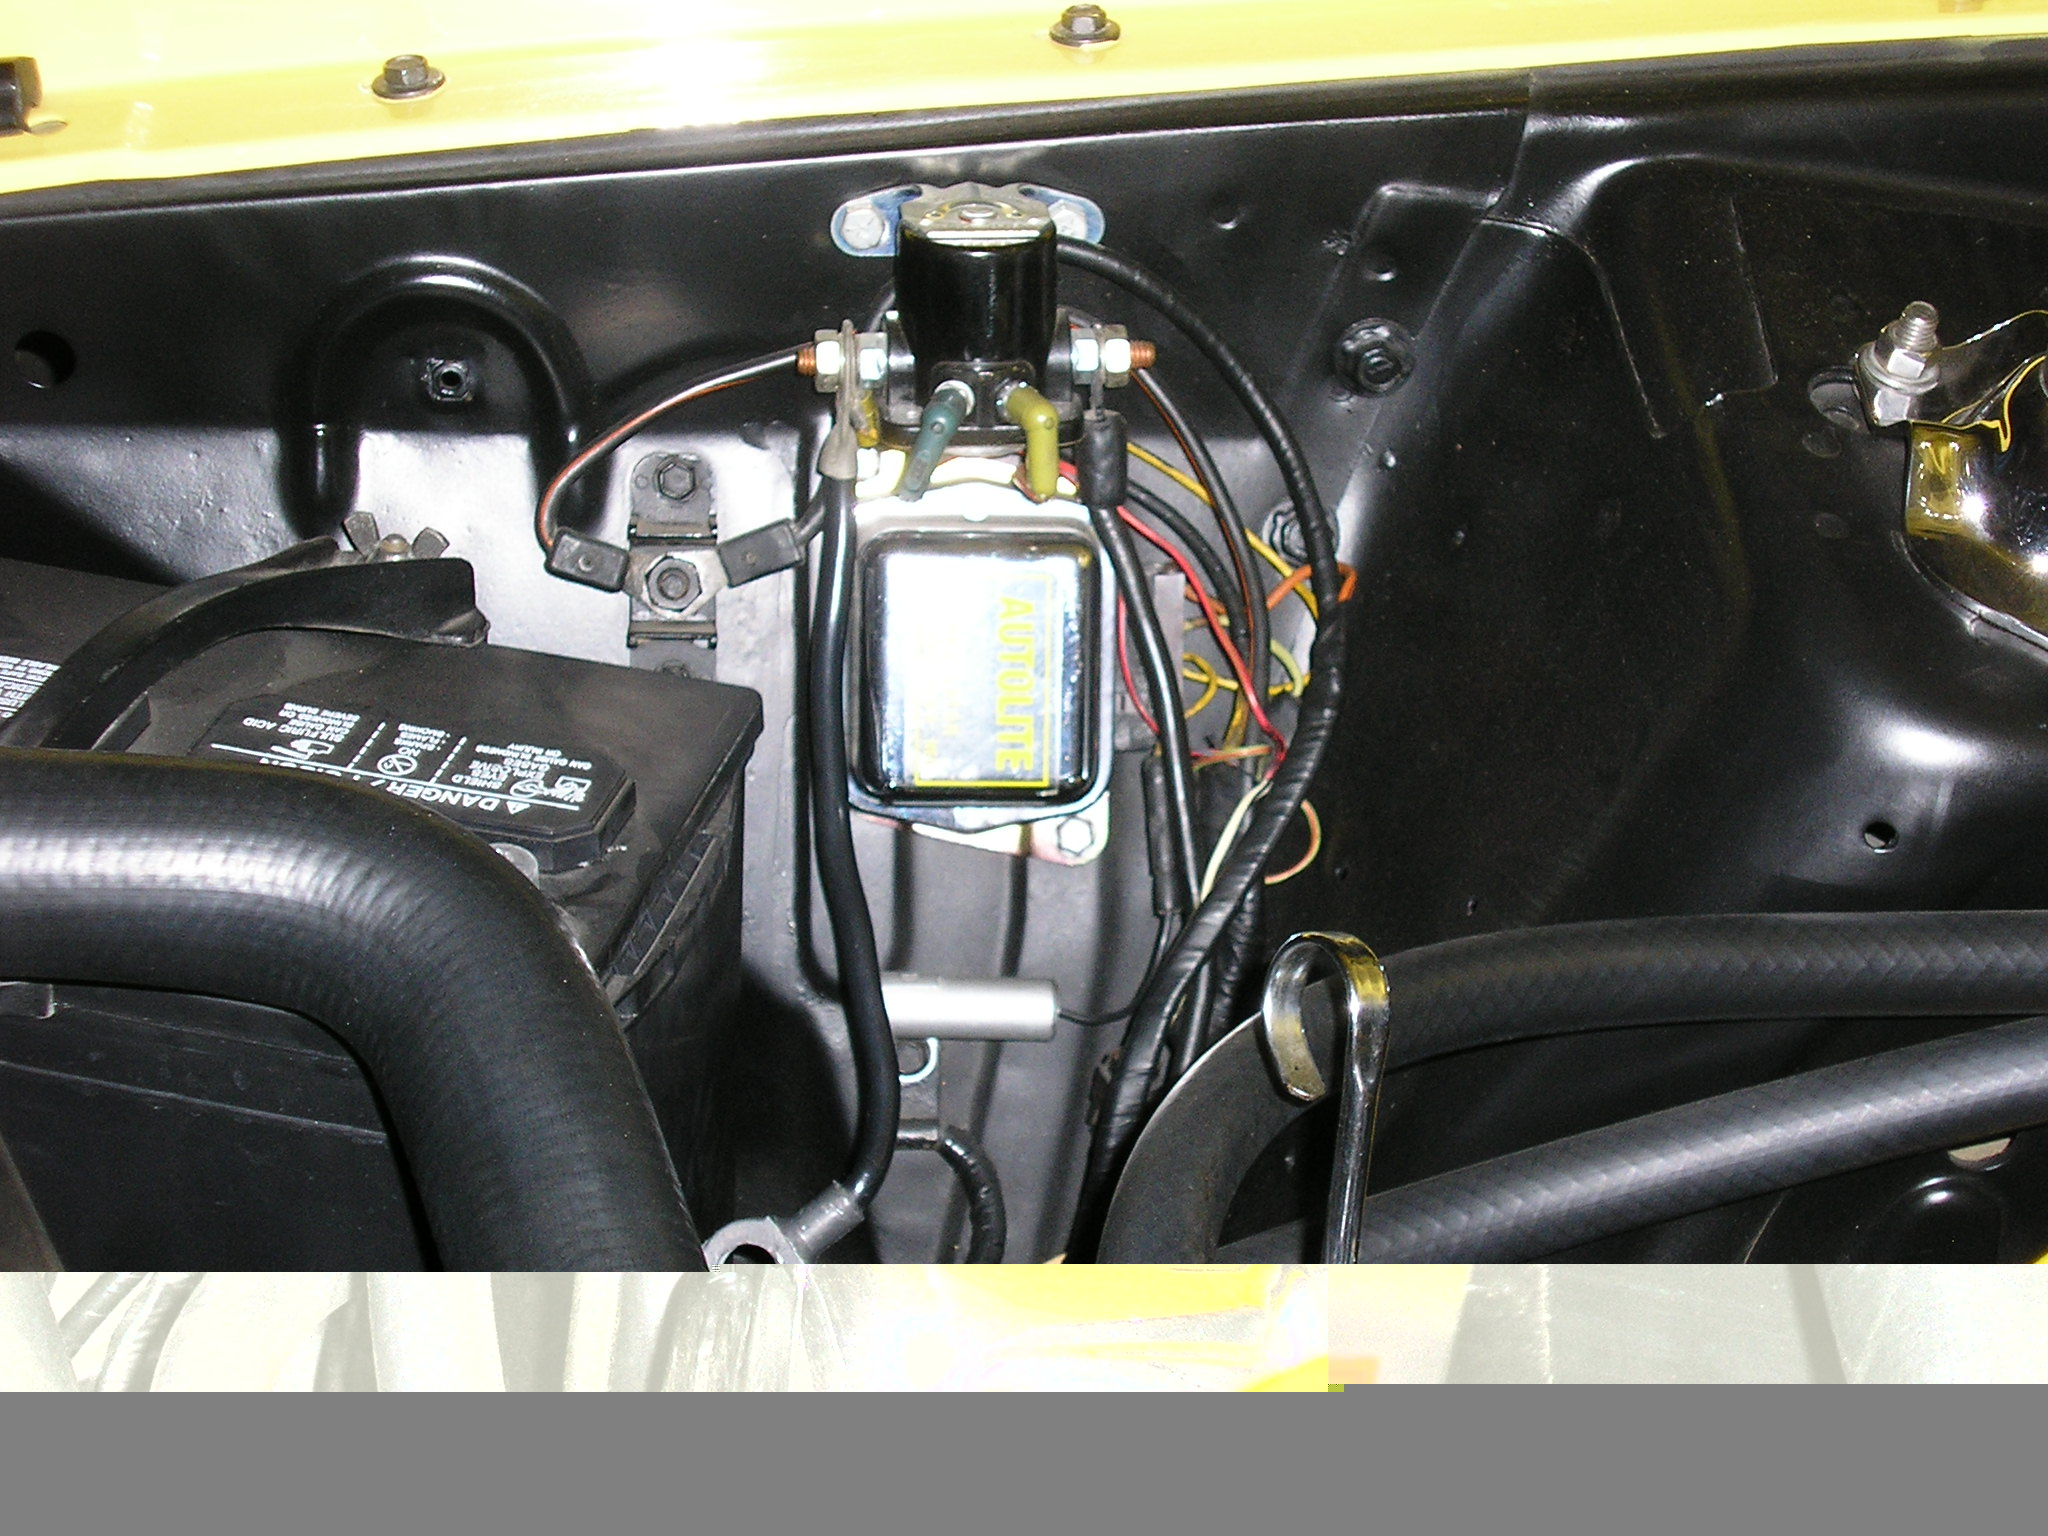 Ford Mustang Starter Solenoid Wiring | Wiring Diagram - Mustang Starter Solenoid Wiring Diagram